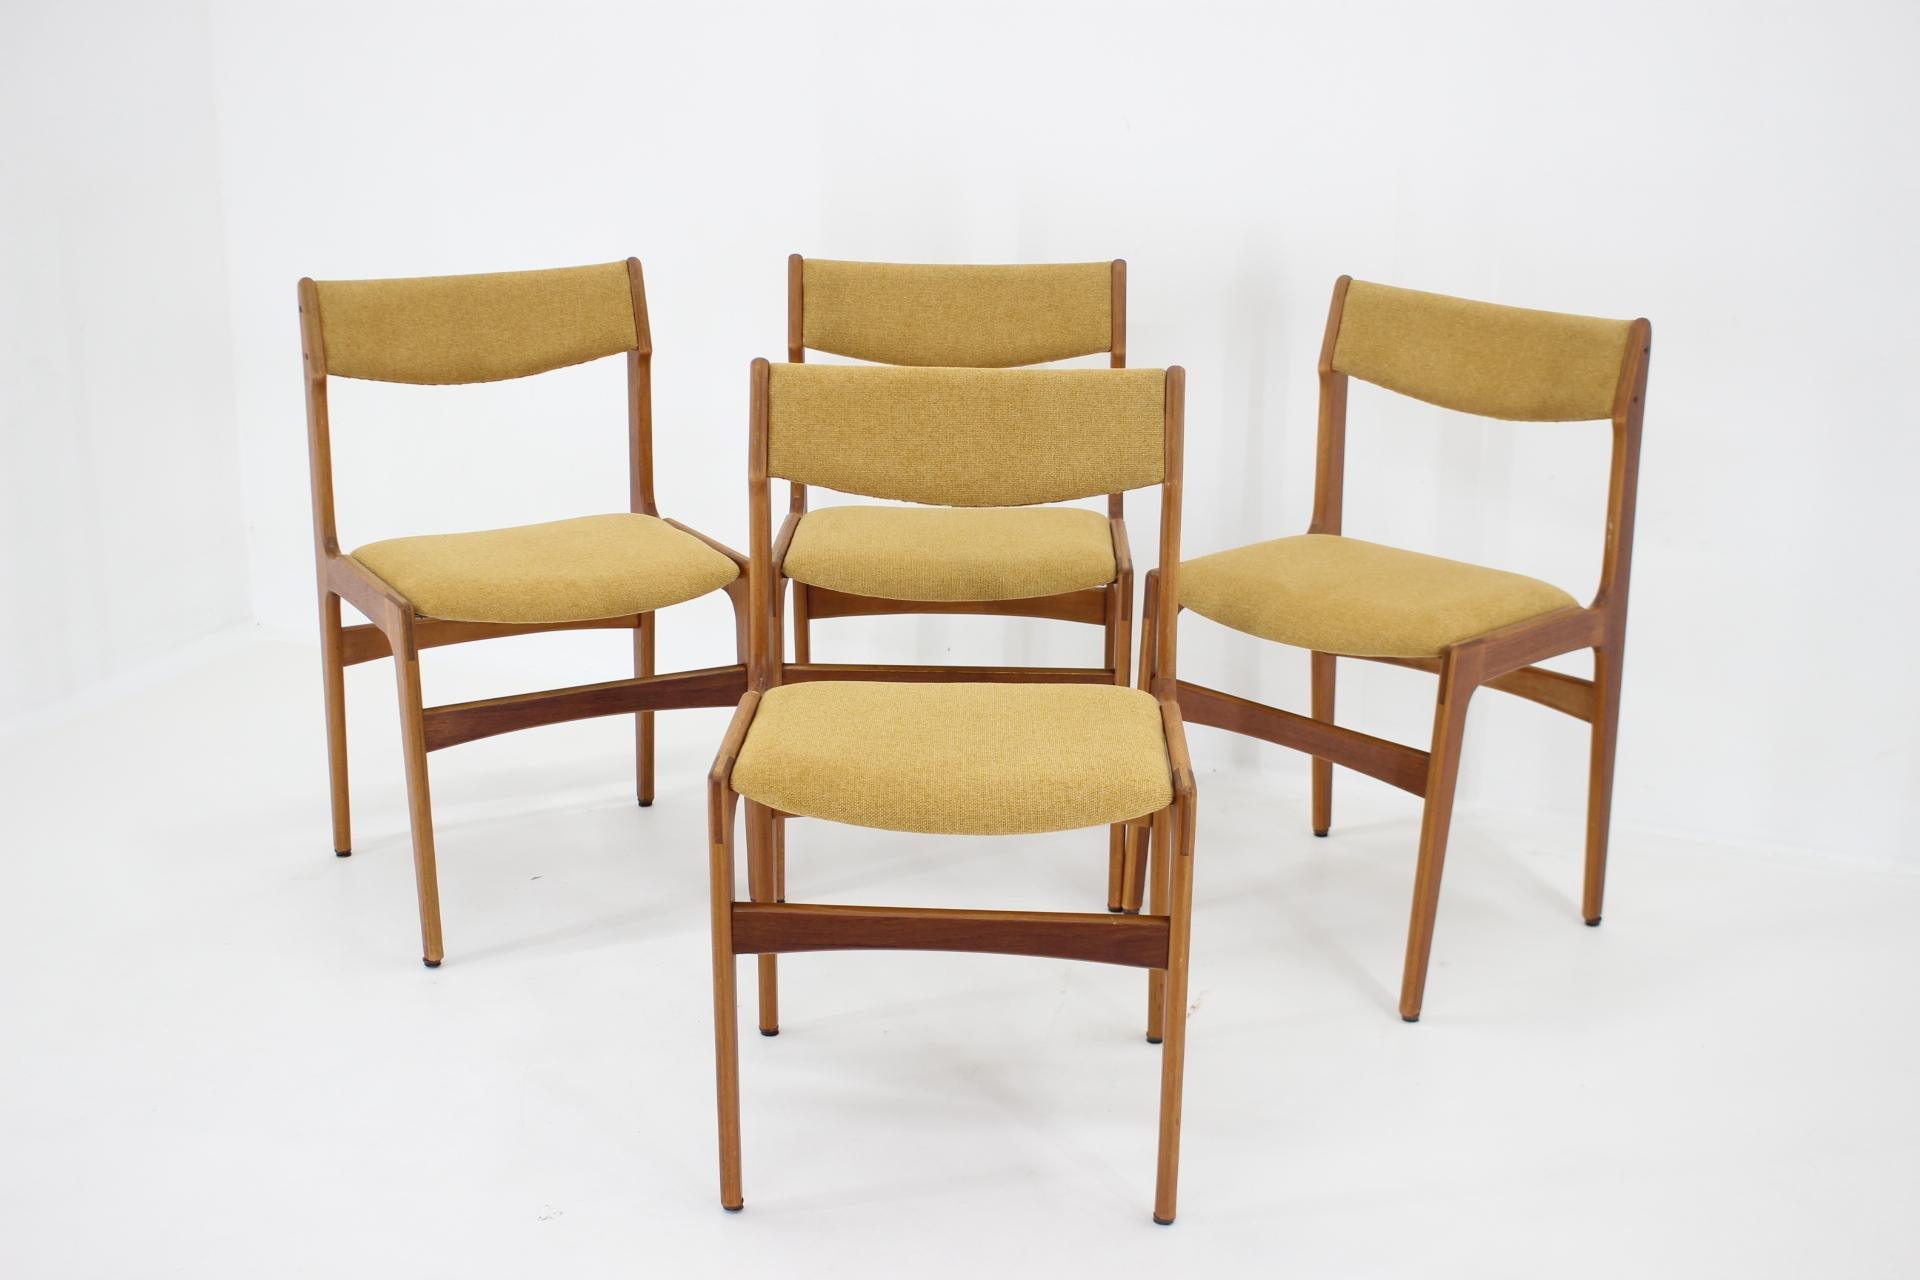 Czech 1960s Set of Four Teak Dining Chairs, Denmark